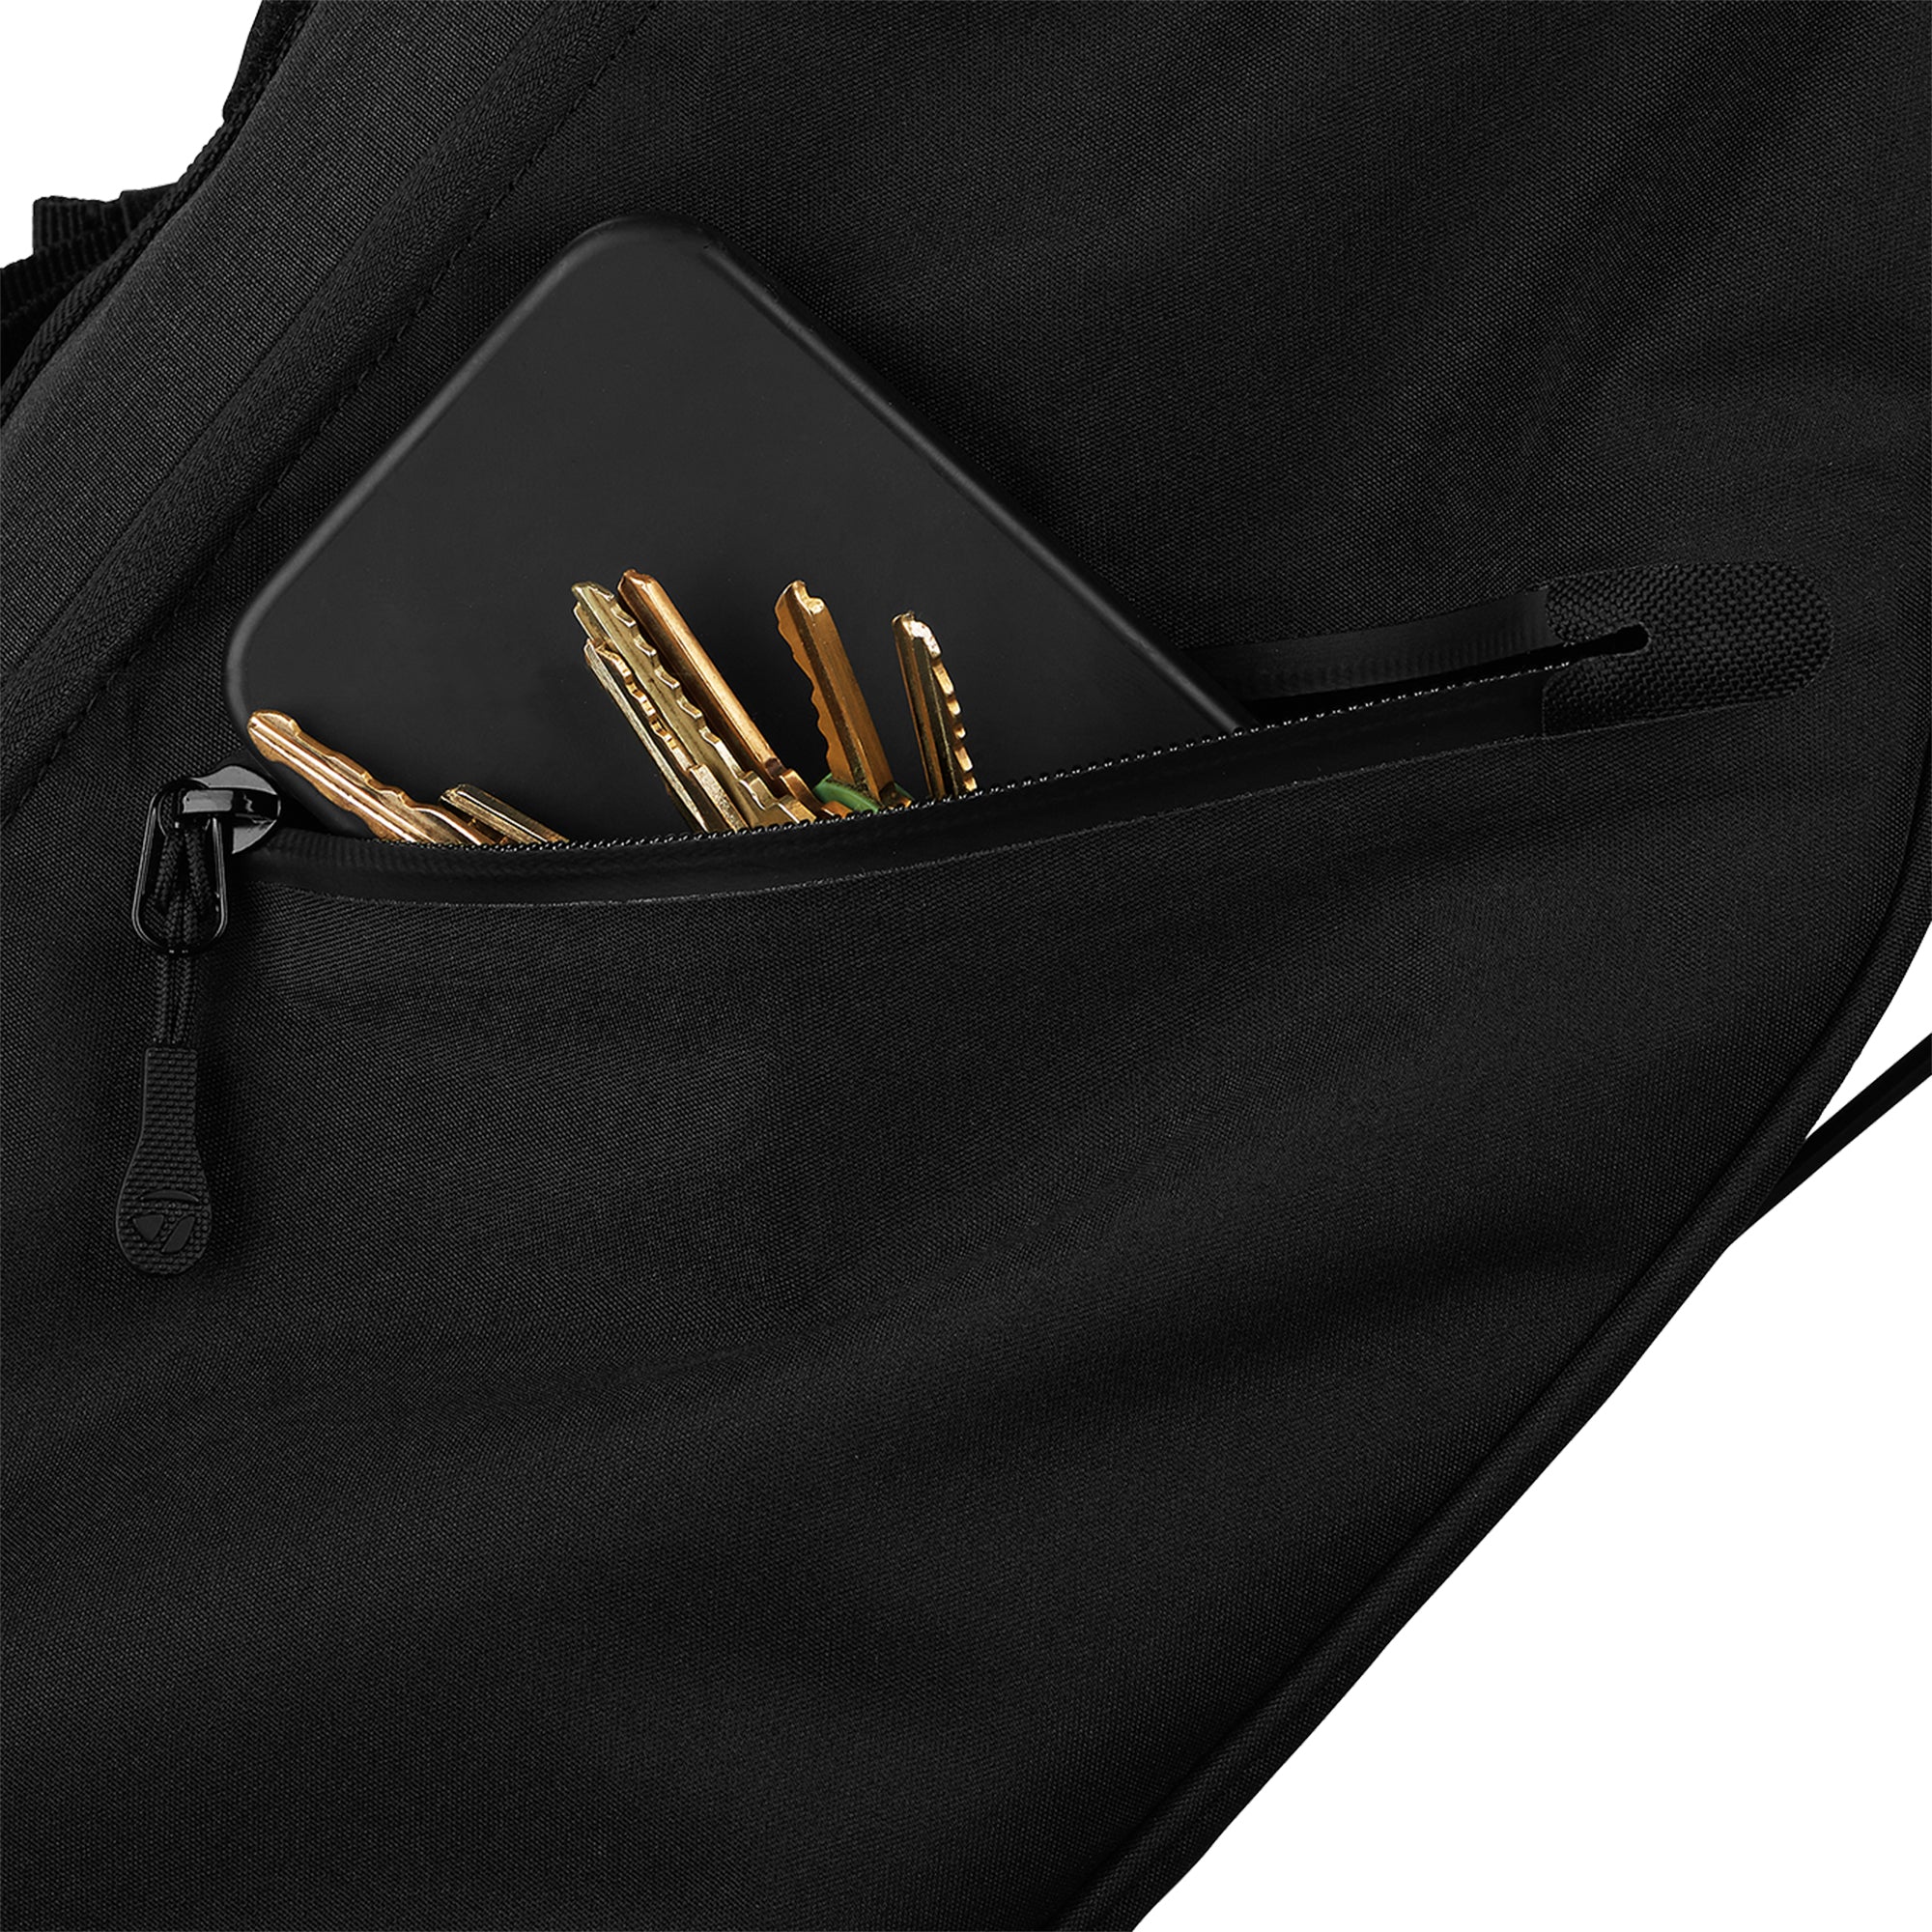 taylormade-flextech-carry-stand-golf-bag-n26509-black